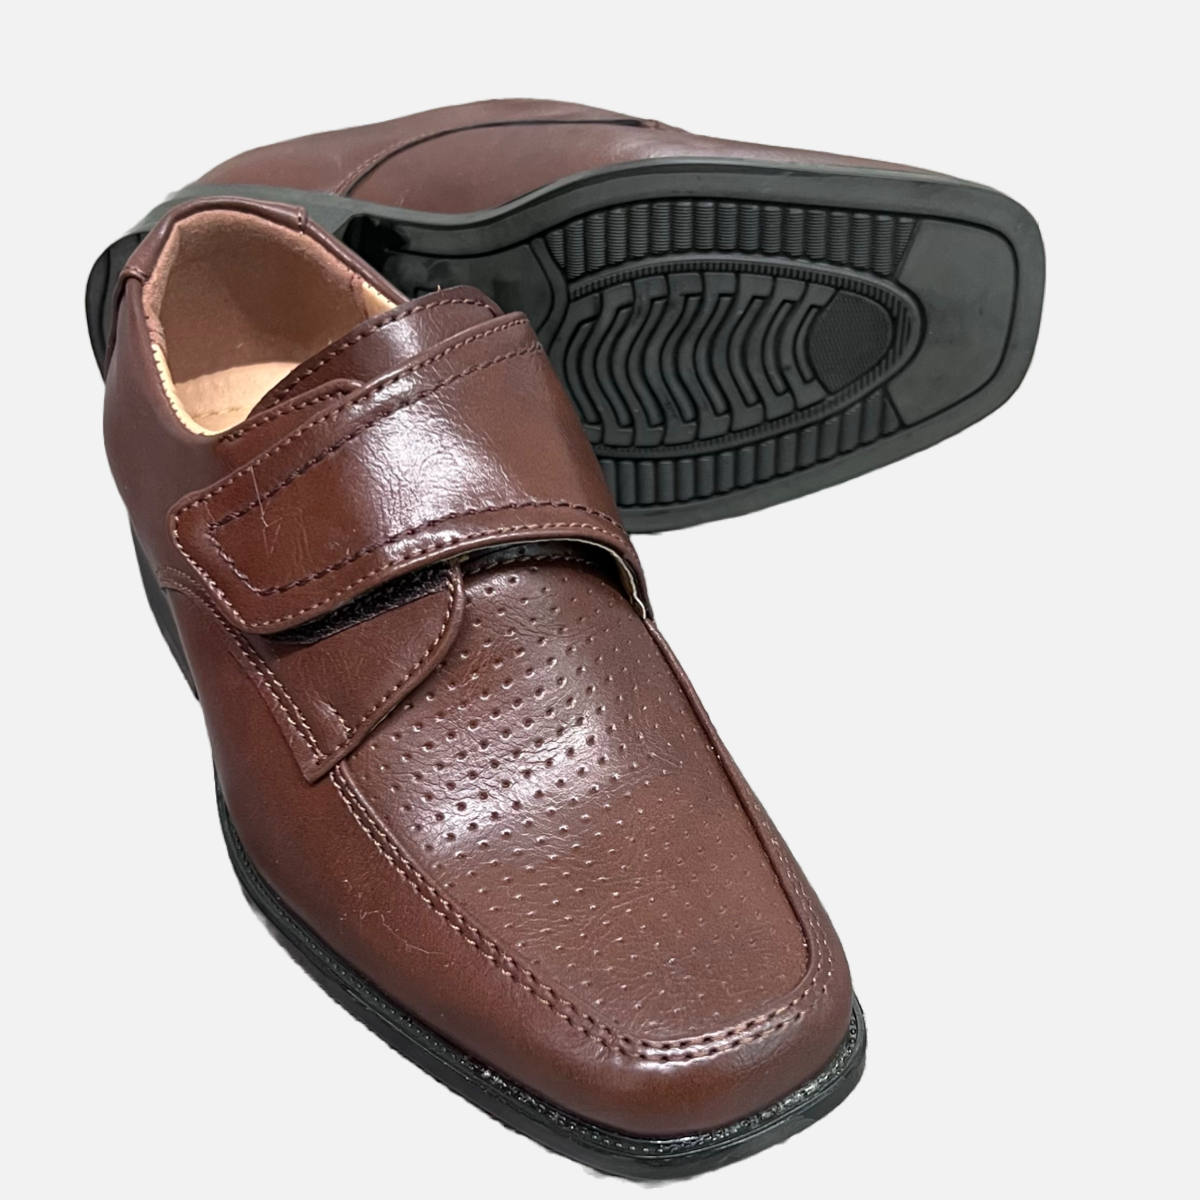 Debonair Velcro Box Toe Dress Shoe